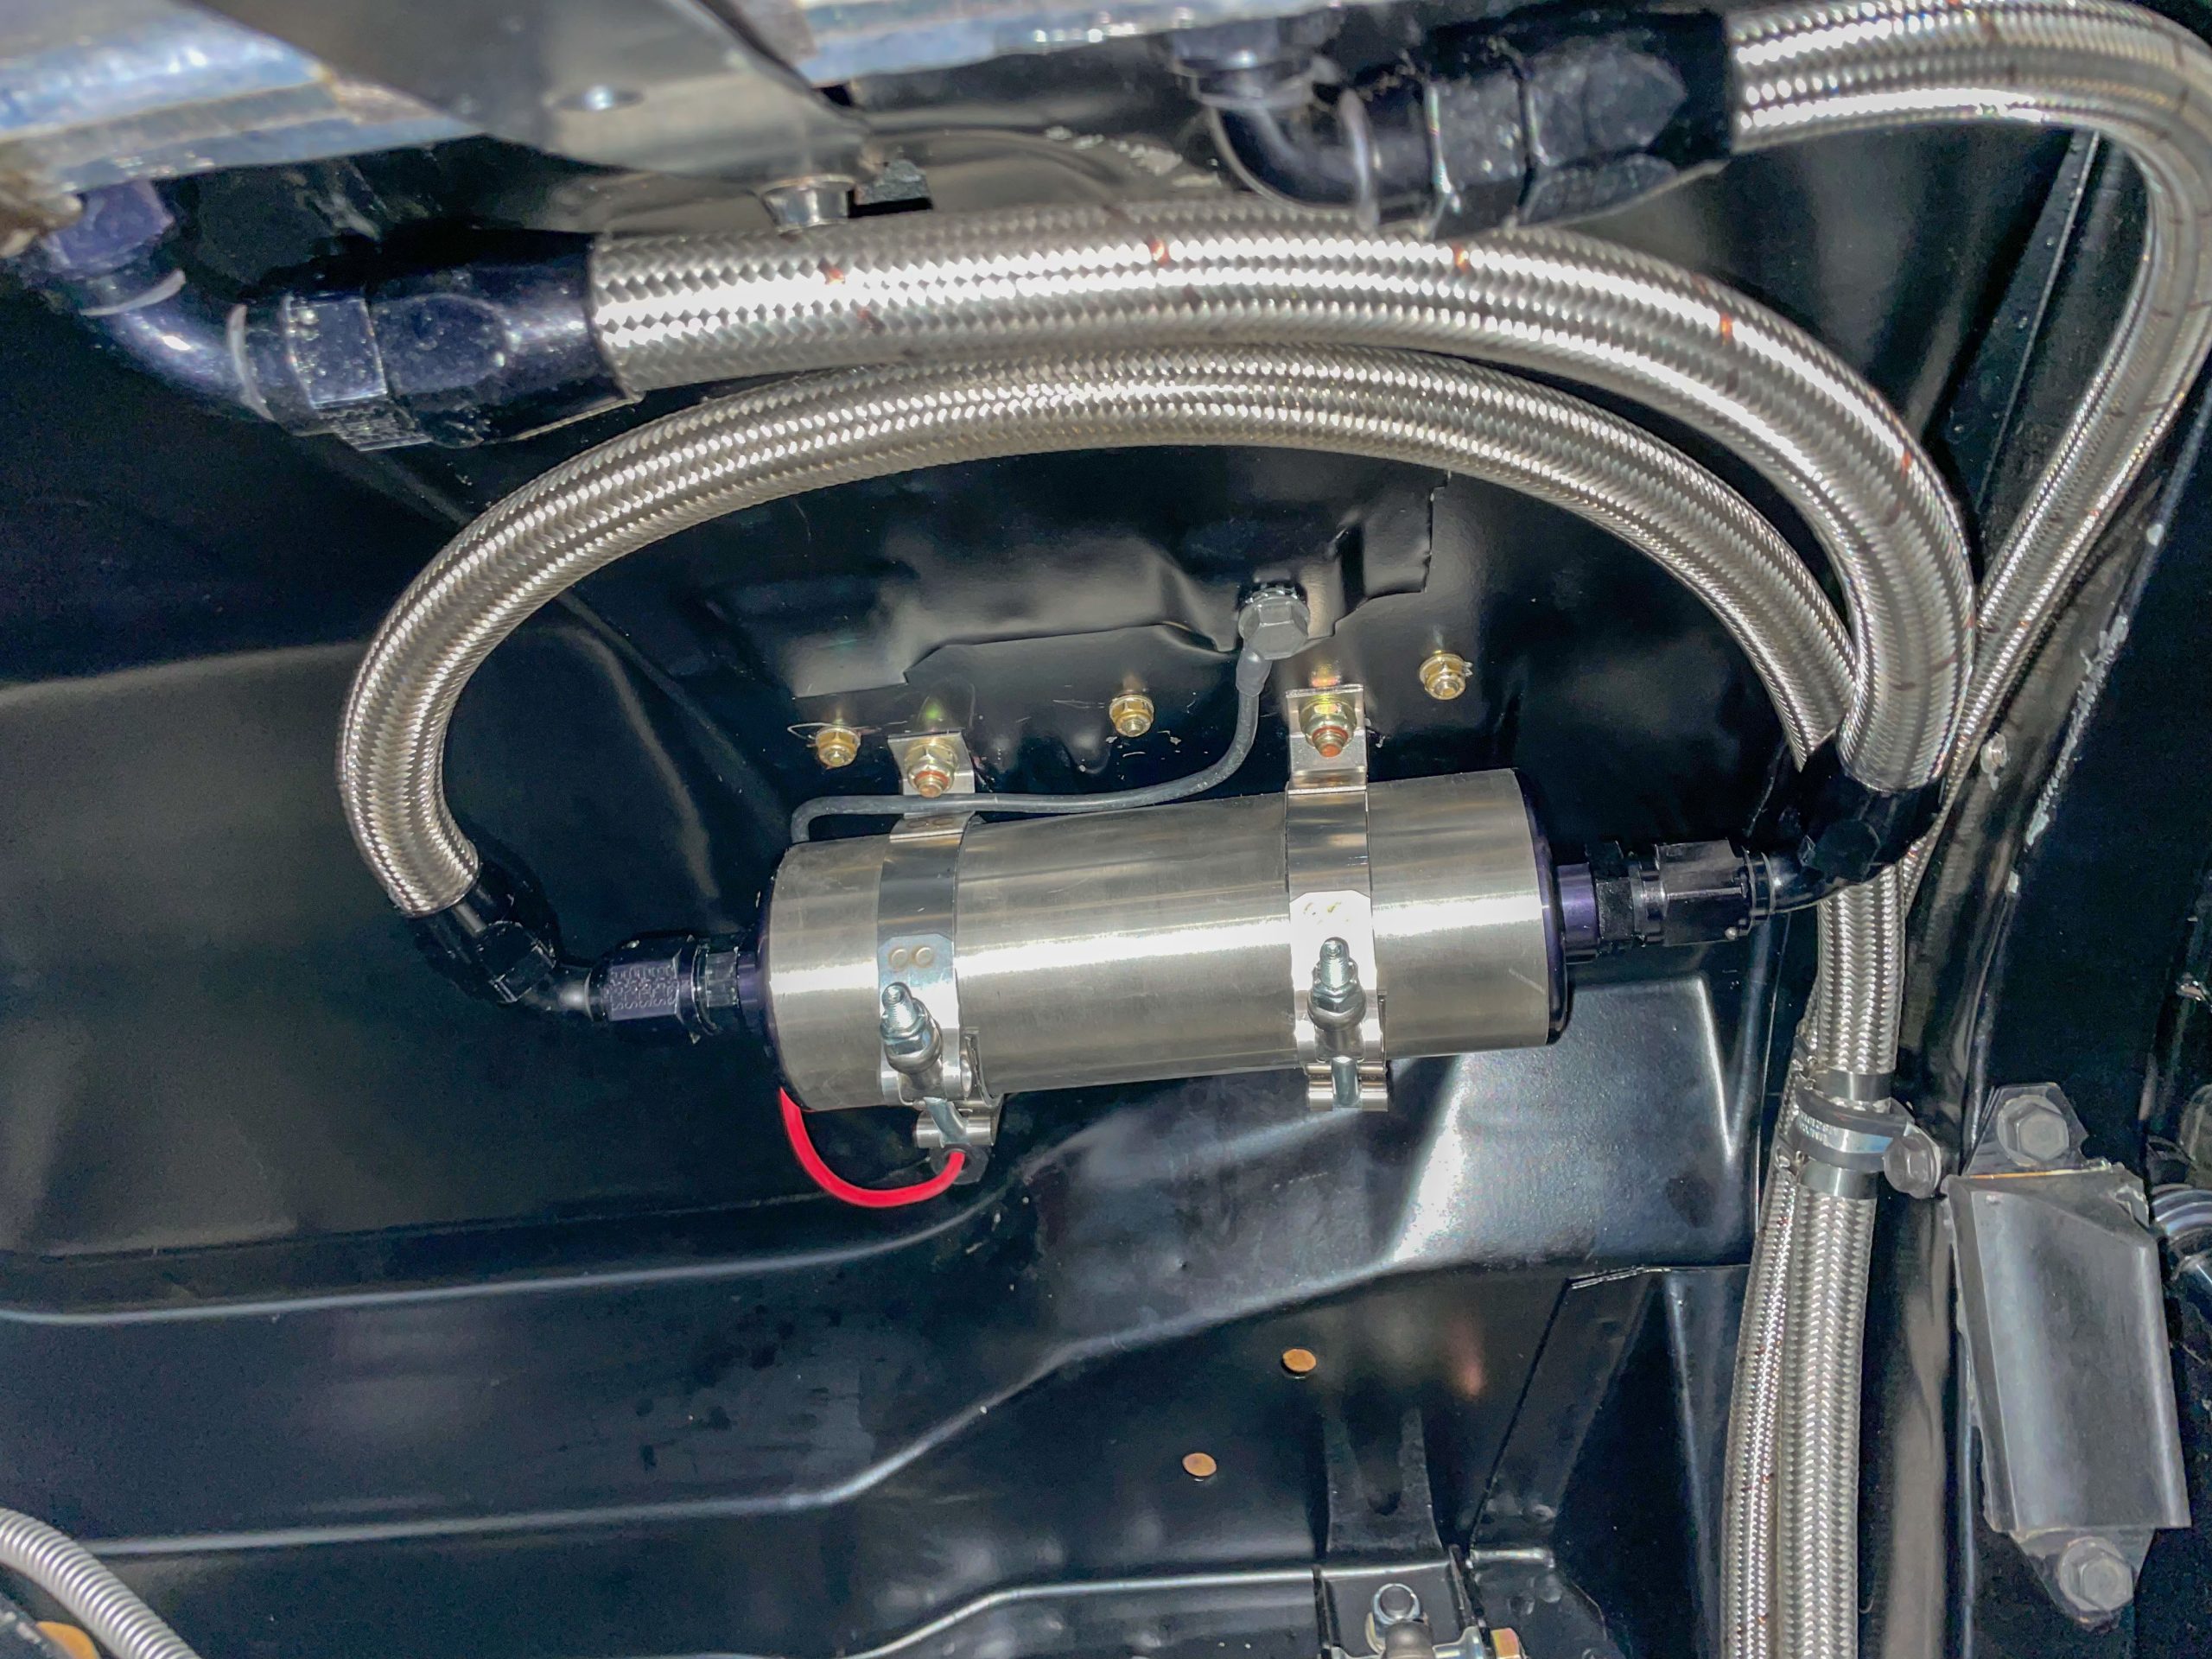  Autobest F1012 In-Tank Electric Fuel Pump : Automotive